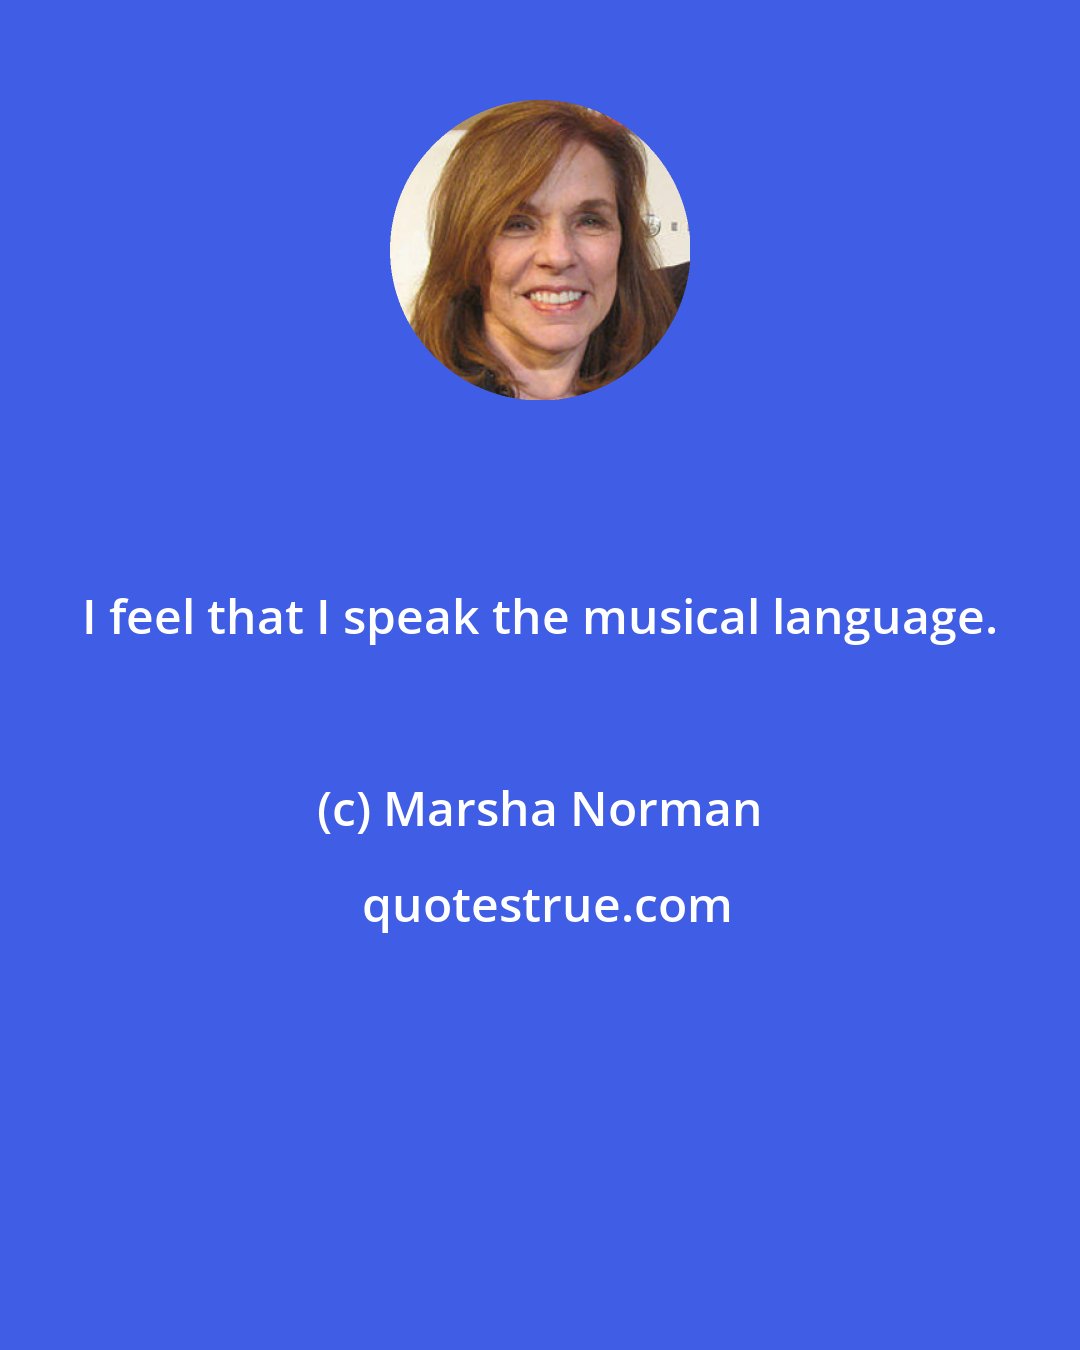 Marsha Norman: I feel that I speak the musical language.